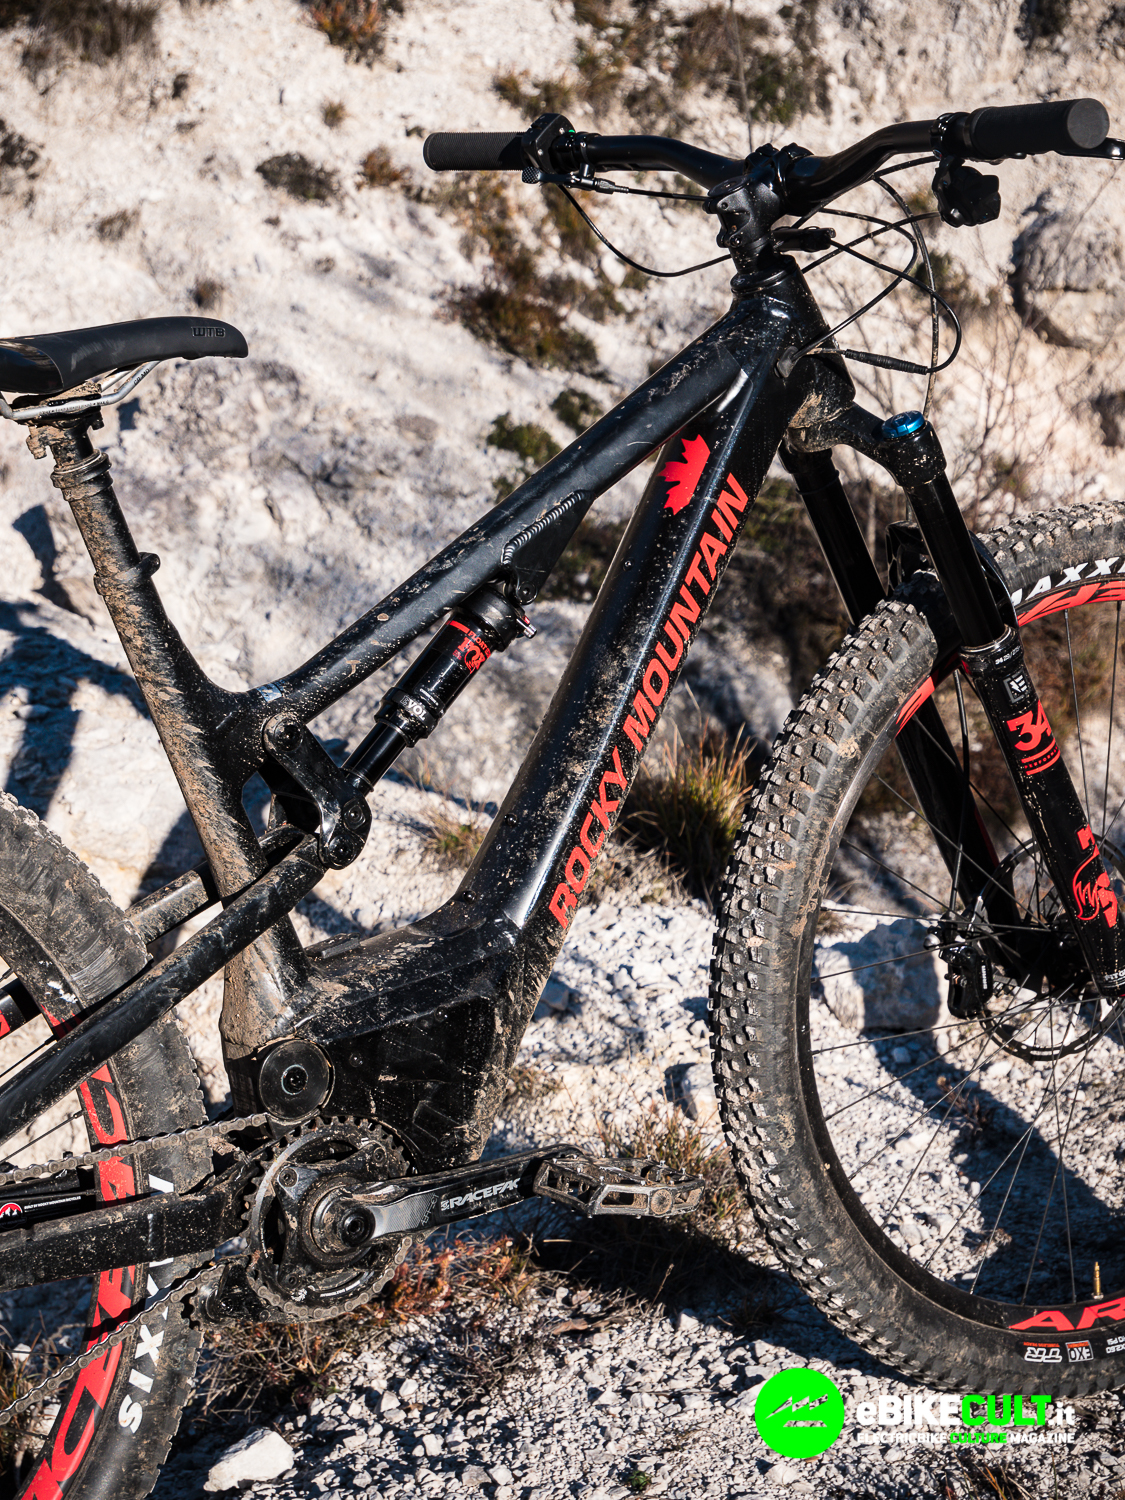 rocky mountain e bike 2019